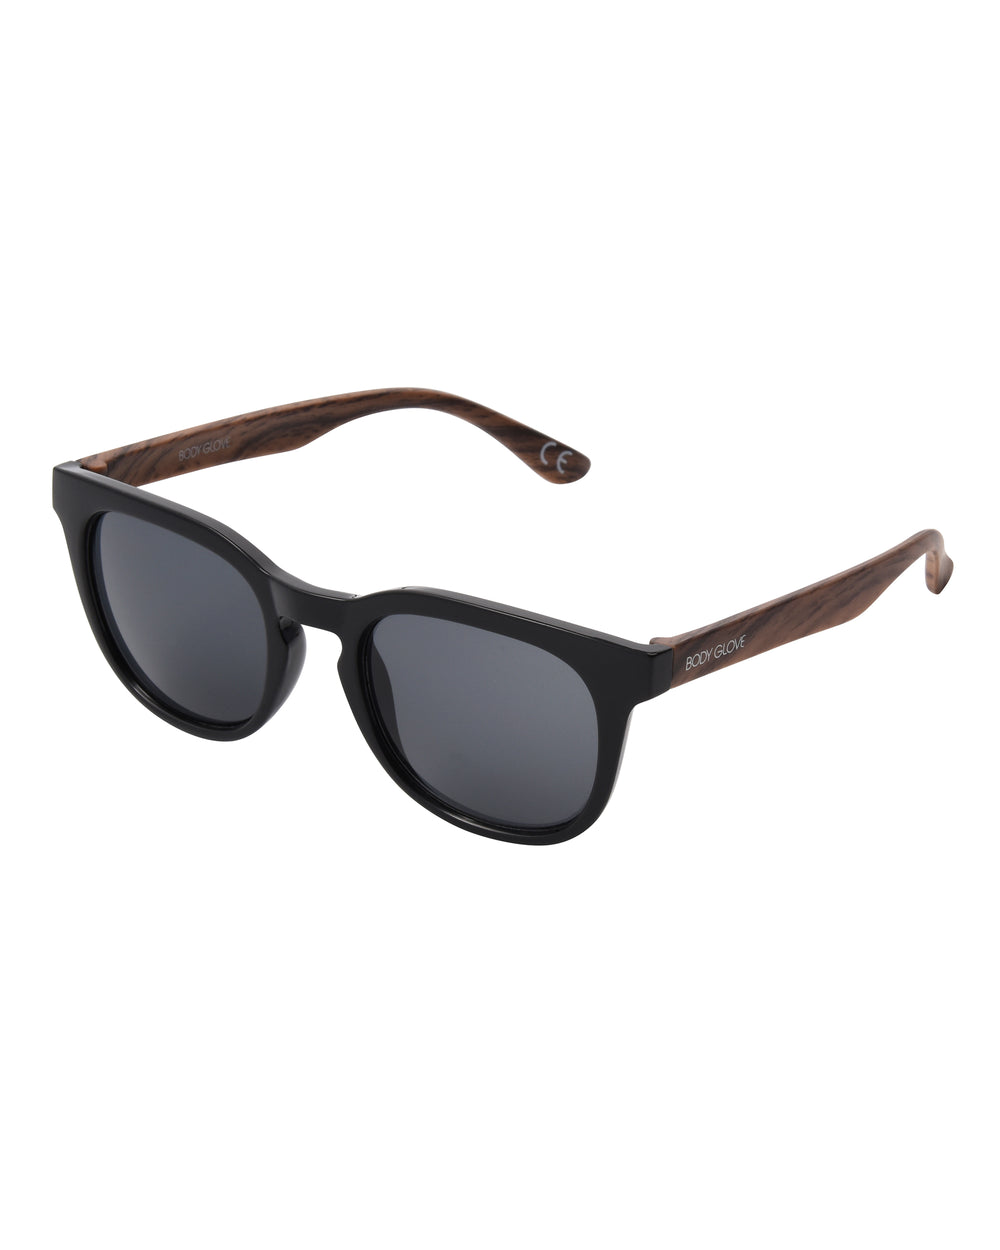 Maxwell Square Sunglasses - Black/Dark Wood